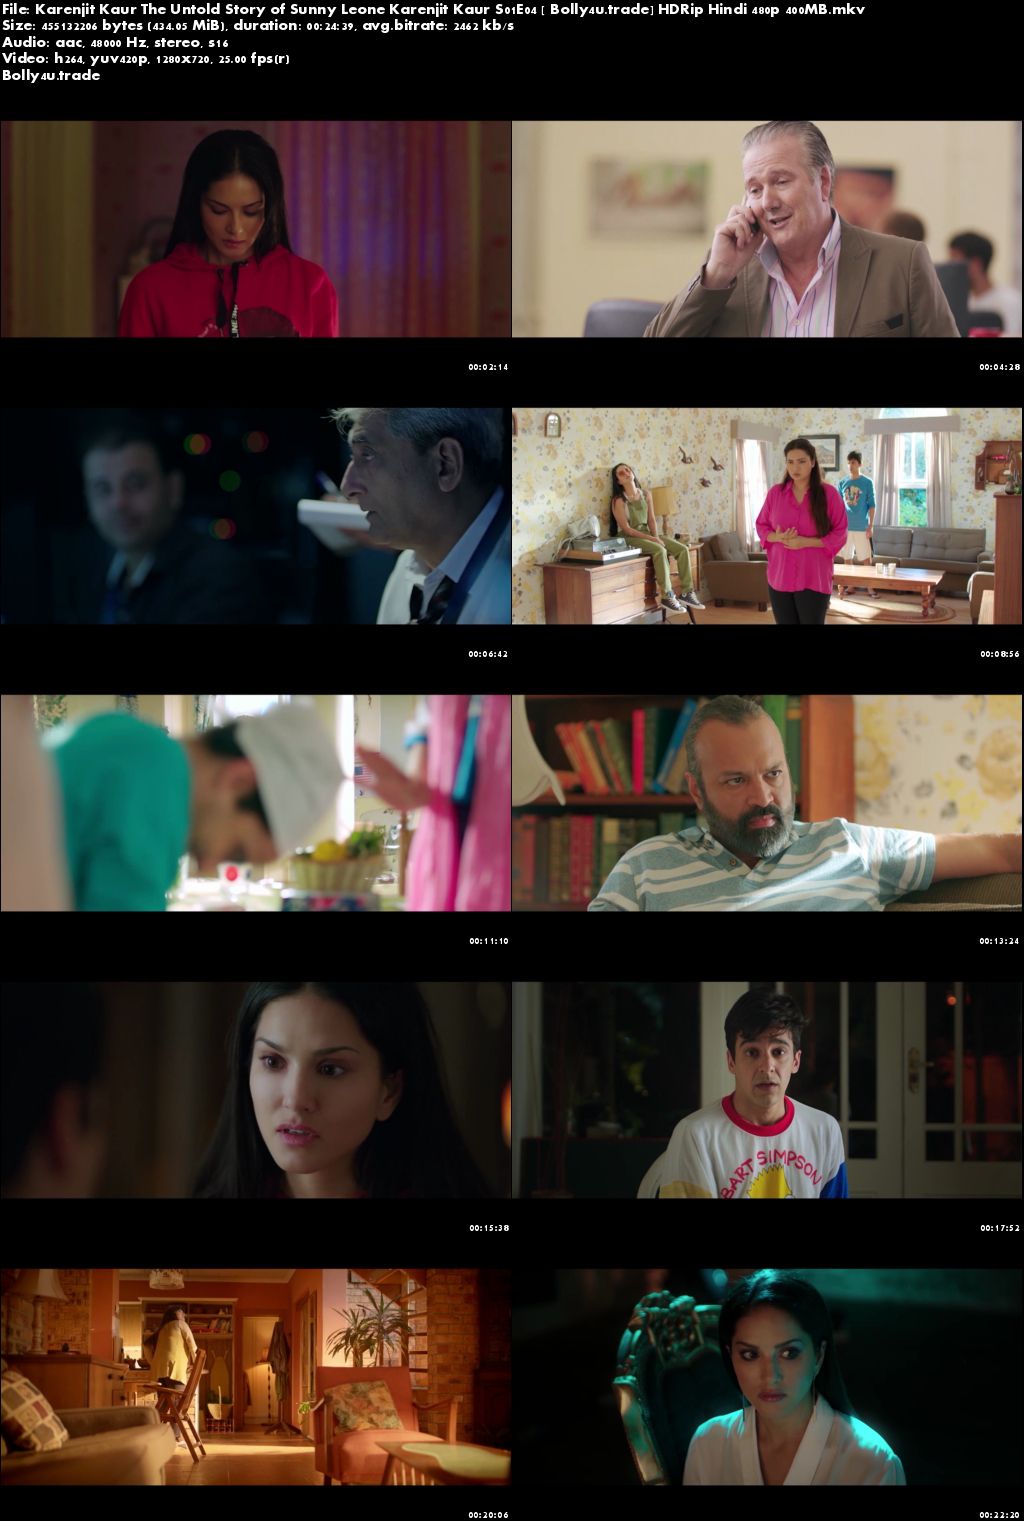 Karenjit Kaur The Untold Story of Sunny Leone S01E04 HDRip 400MB Hindi 720p Download